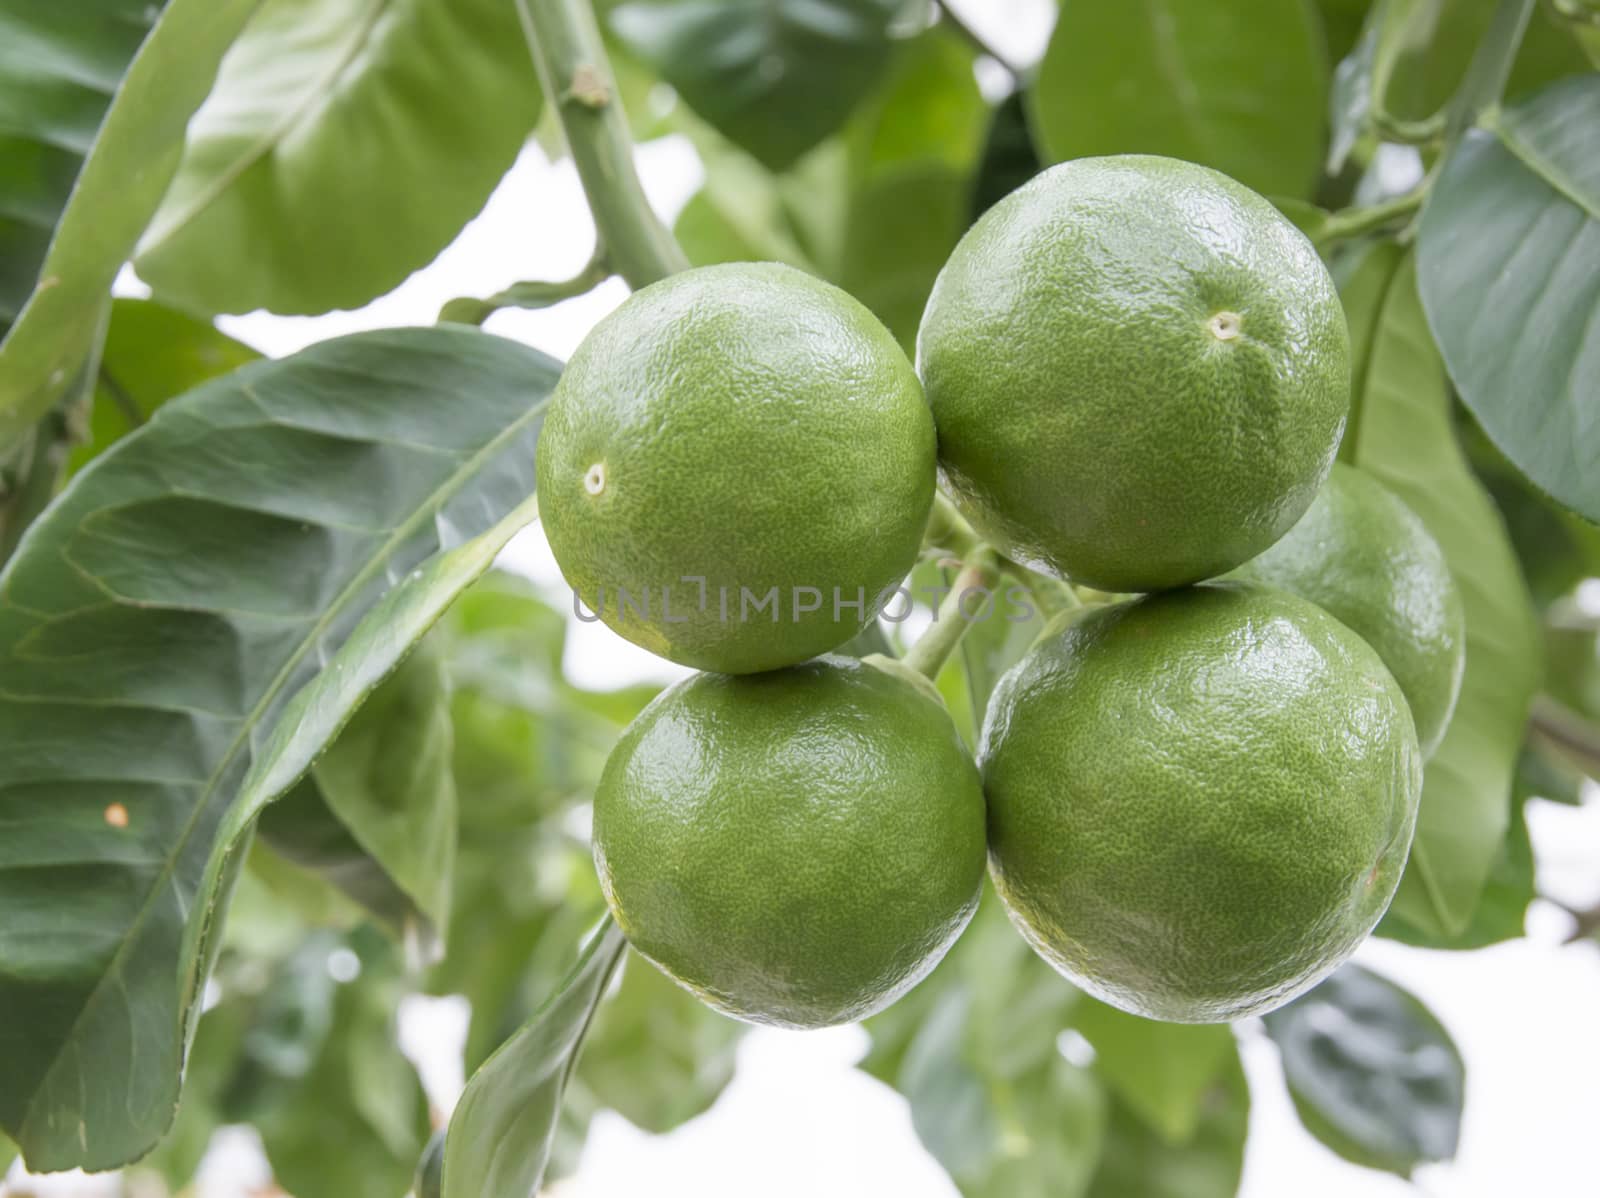 Lime fruits on a tree by ArtesiaWells